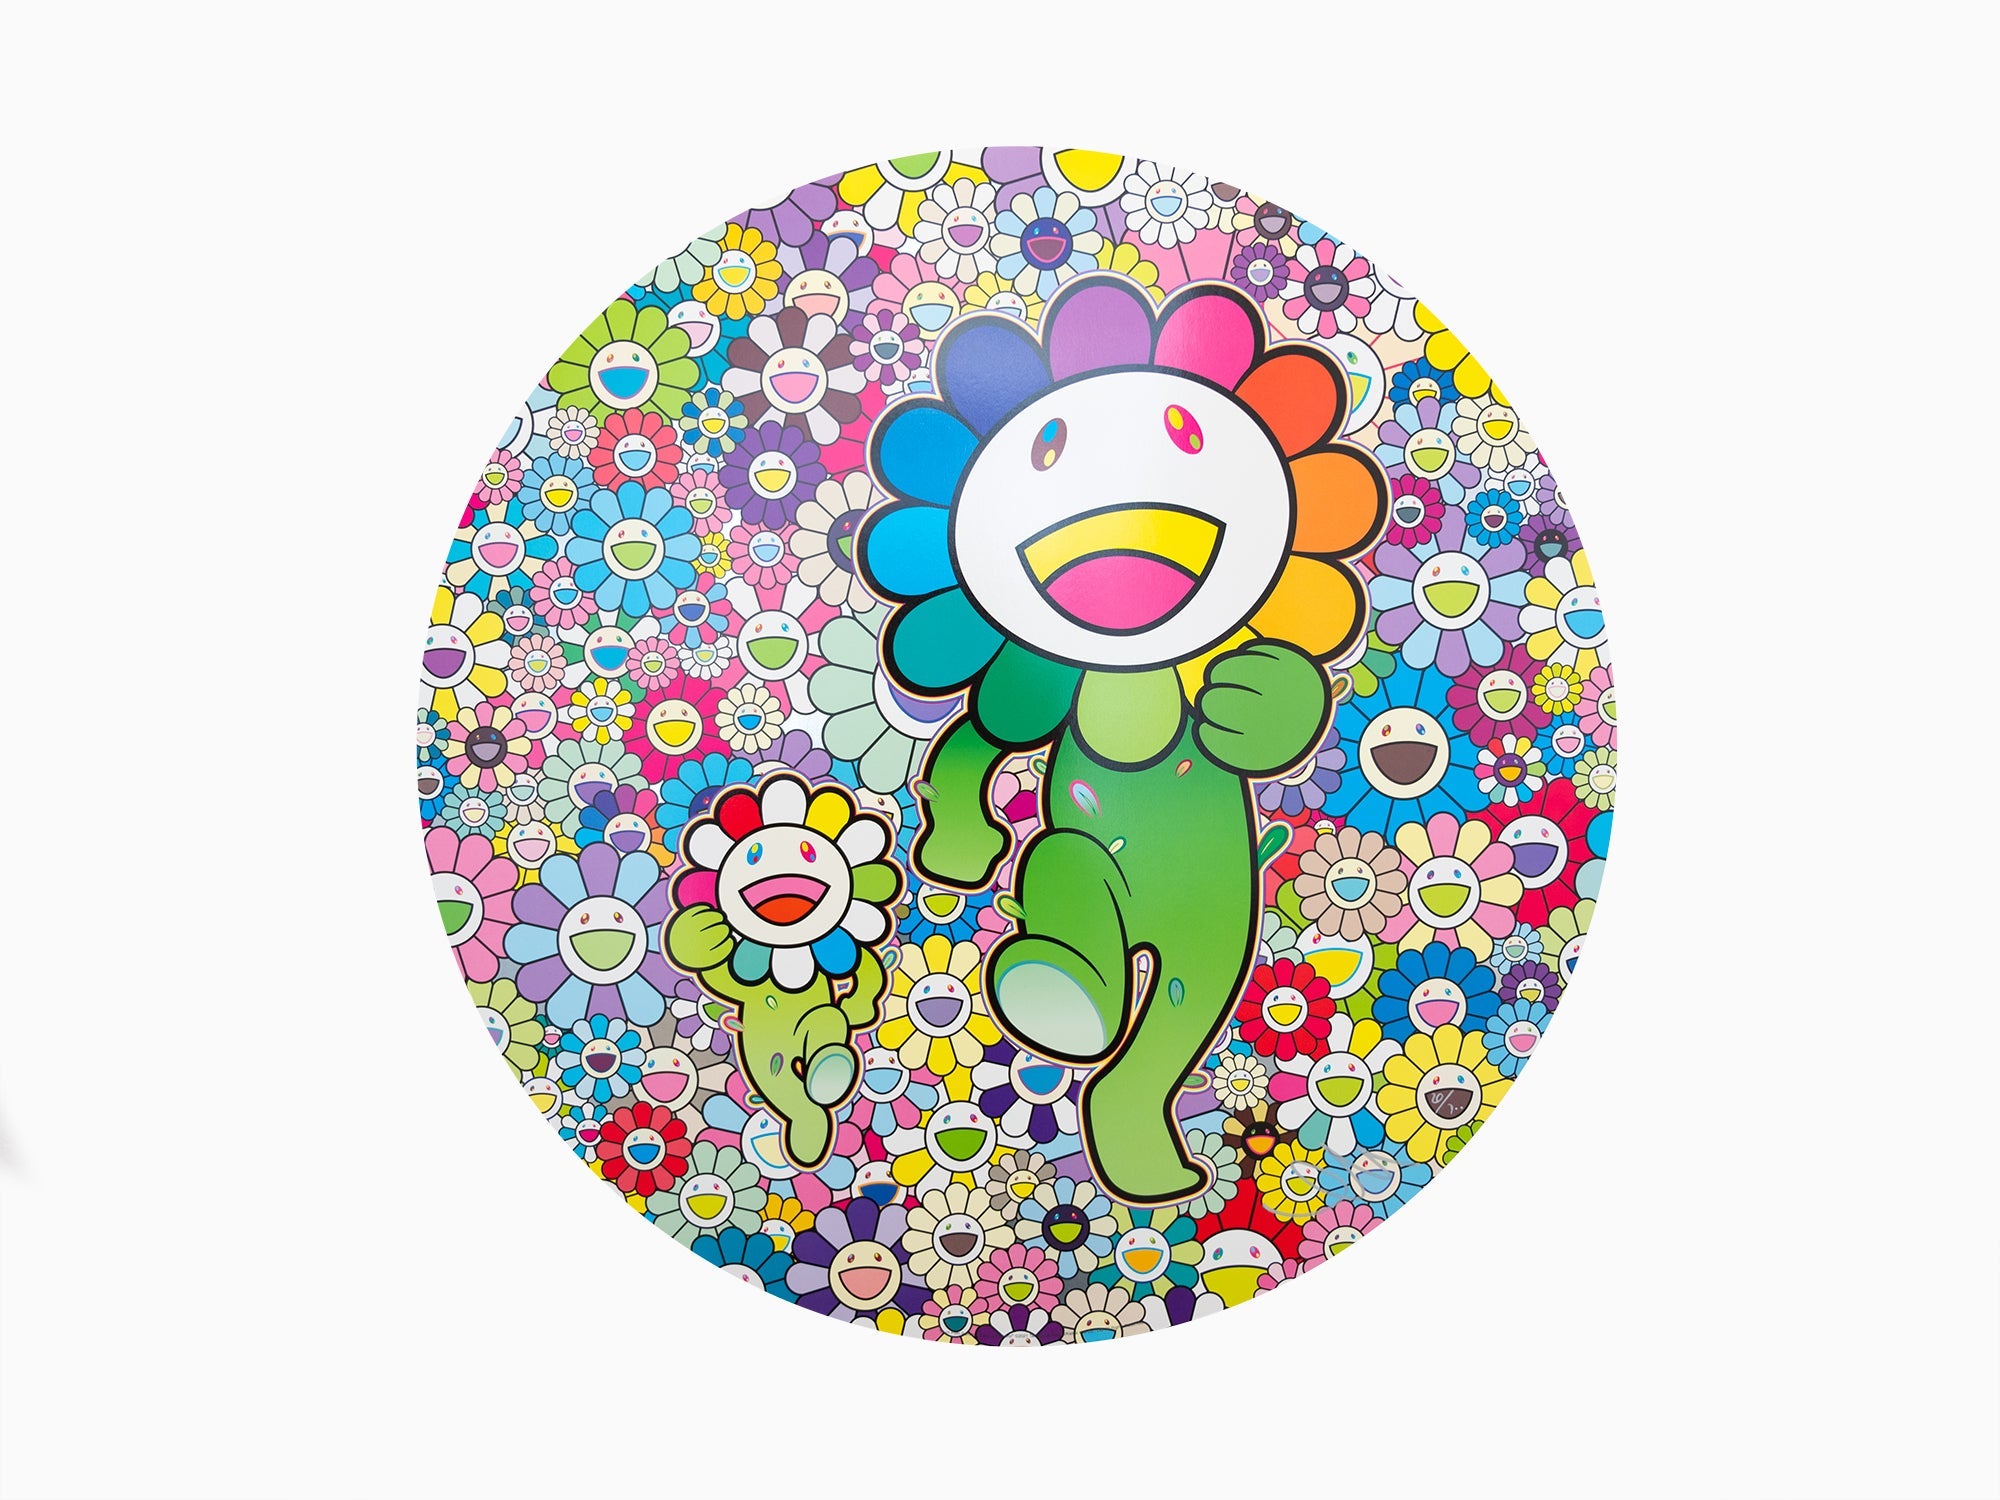 Takashi Murakami - Rum Pum Pum in a Field of Flowers!